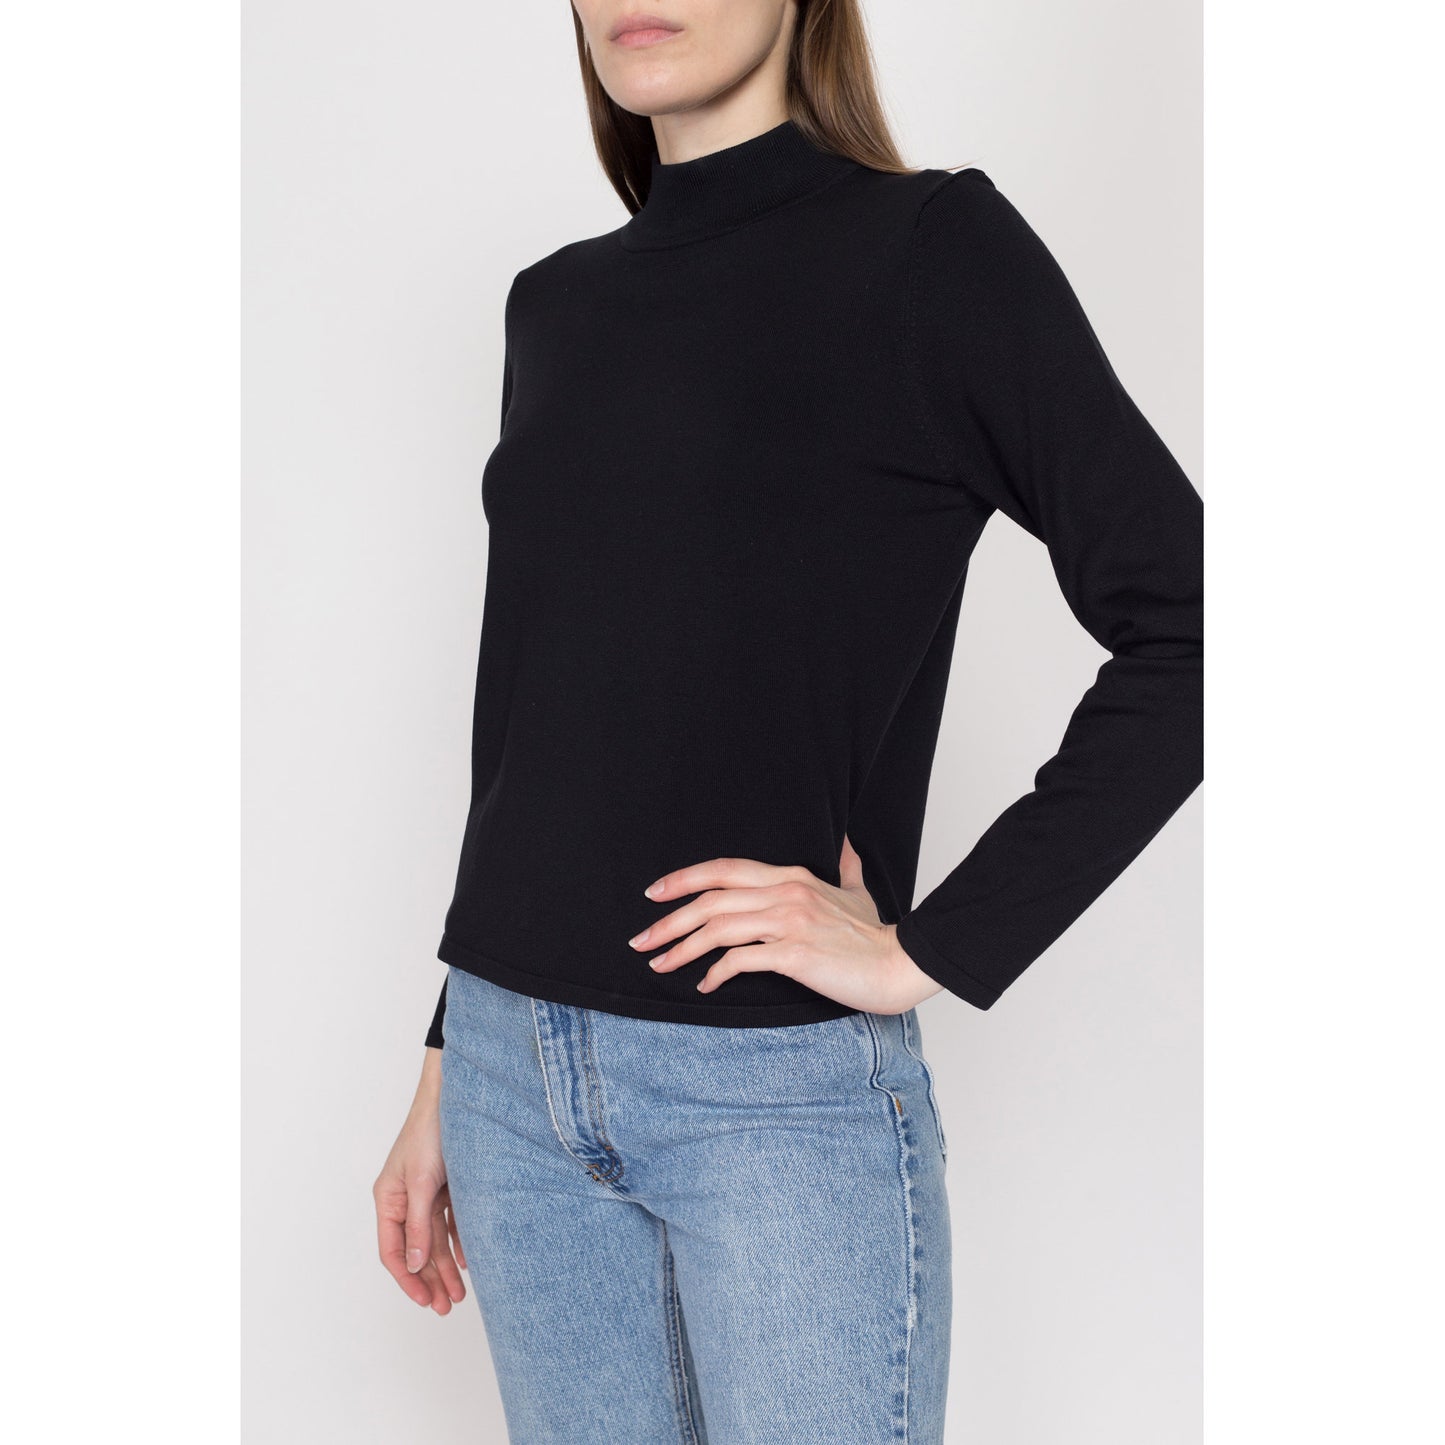 Small 90s Pendleton Black Silk Blend Thermal Shirt | Vintage Base Layer Long Sleeve Warm Undershirt